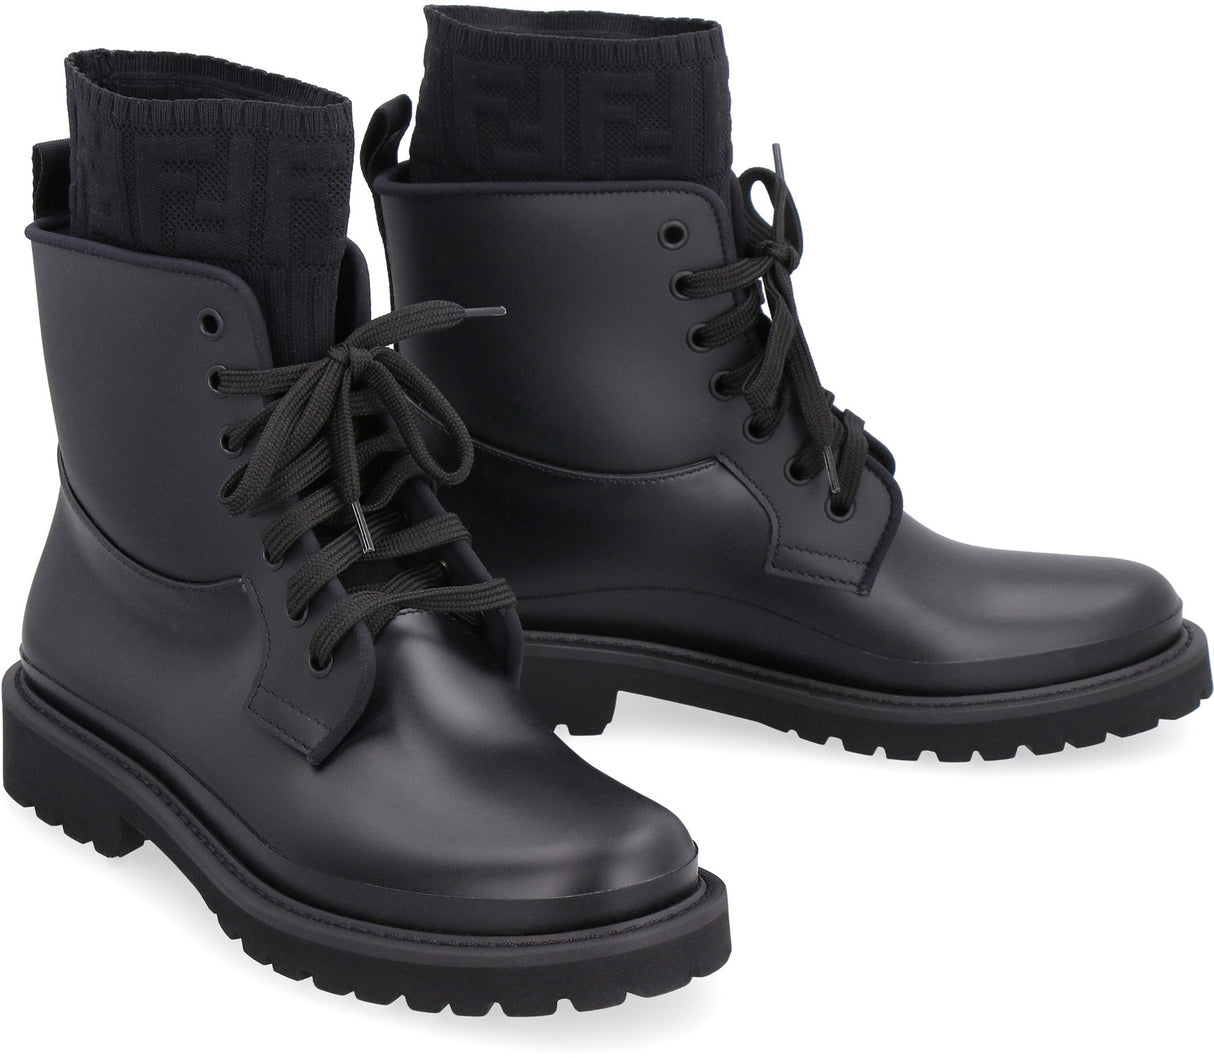 Stylish Black Combat Boots for Women